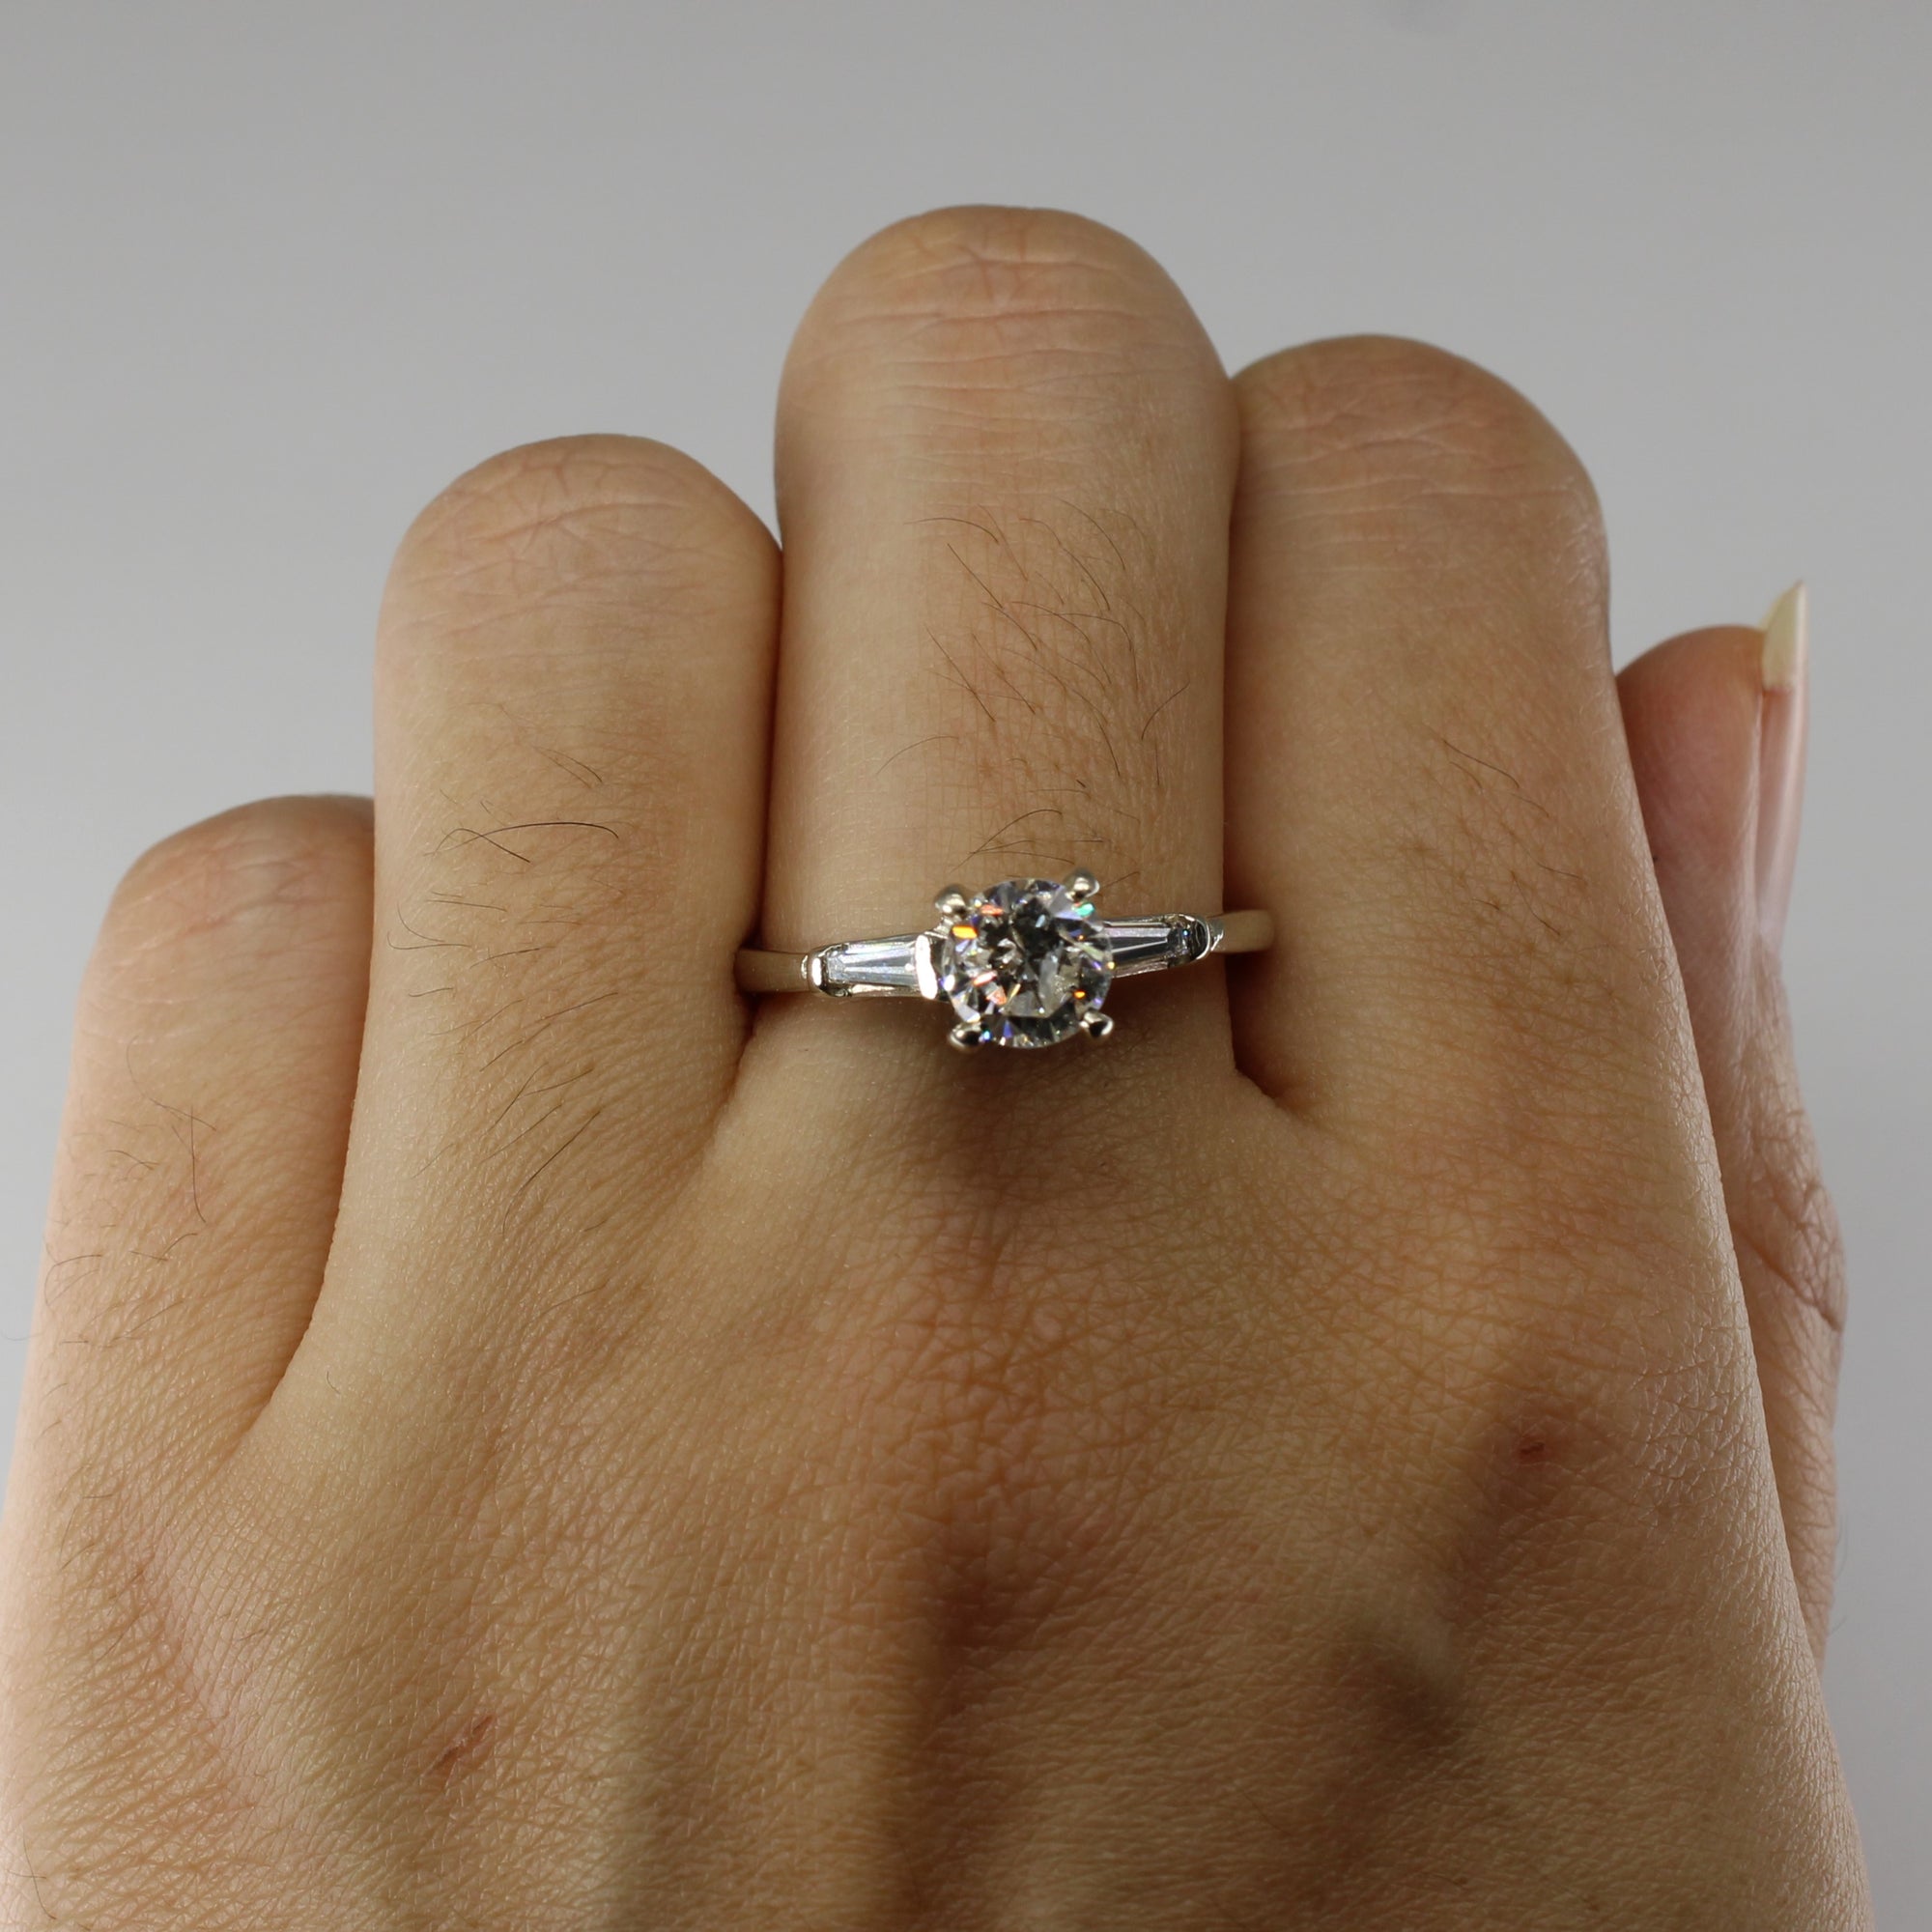 Diamond Engagement Ring with Baguette Accents |1.22ctw | SZ 9 |